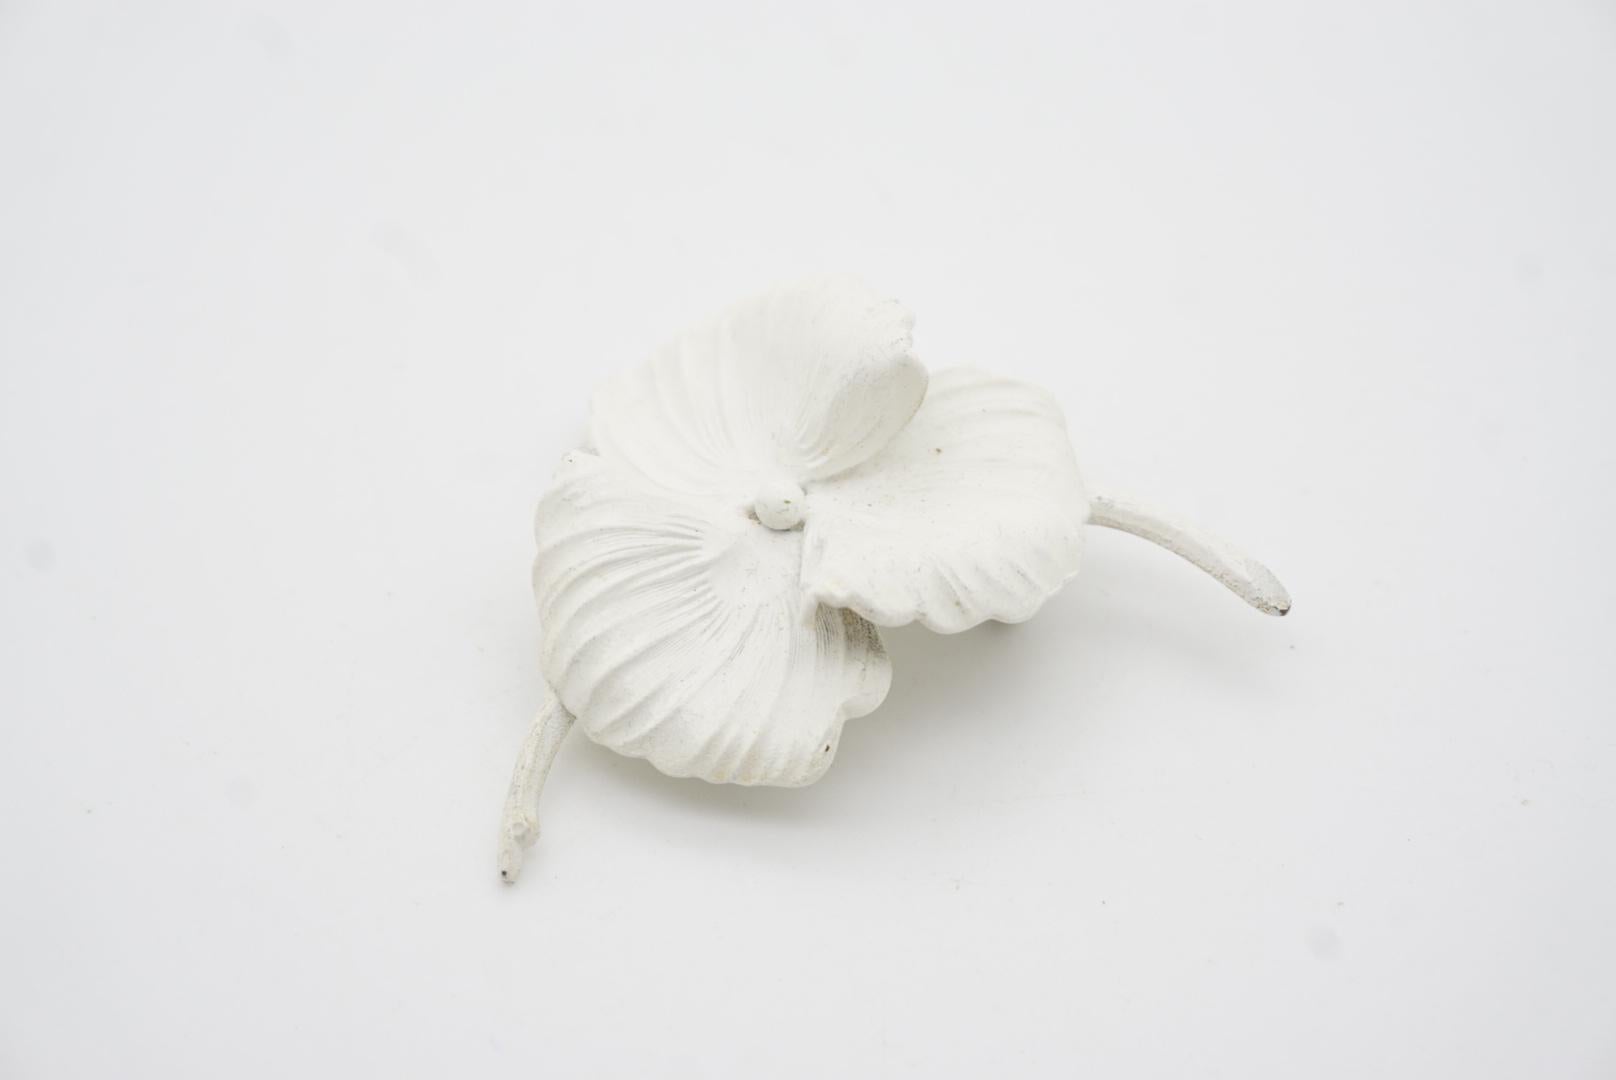 Christian Dior GROSSE 1961 Vintage Swirl White Trio Clover Flower Leaf Brooch For Sale 3